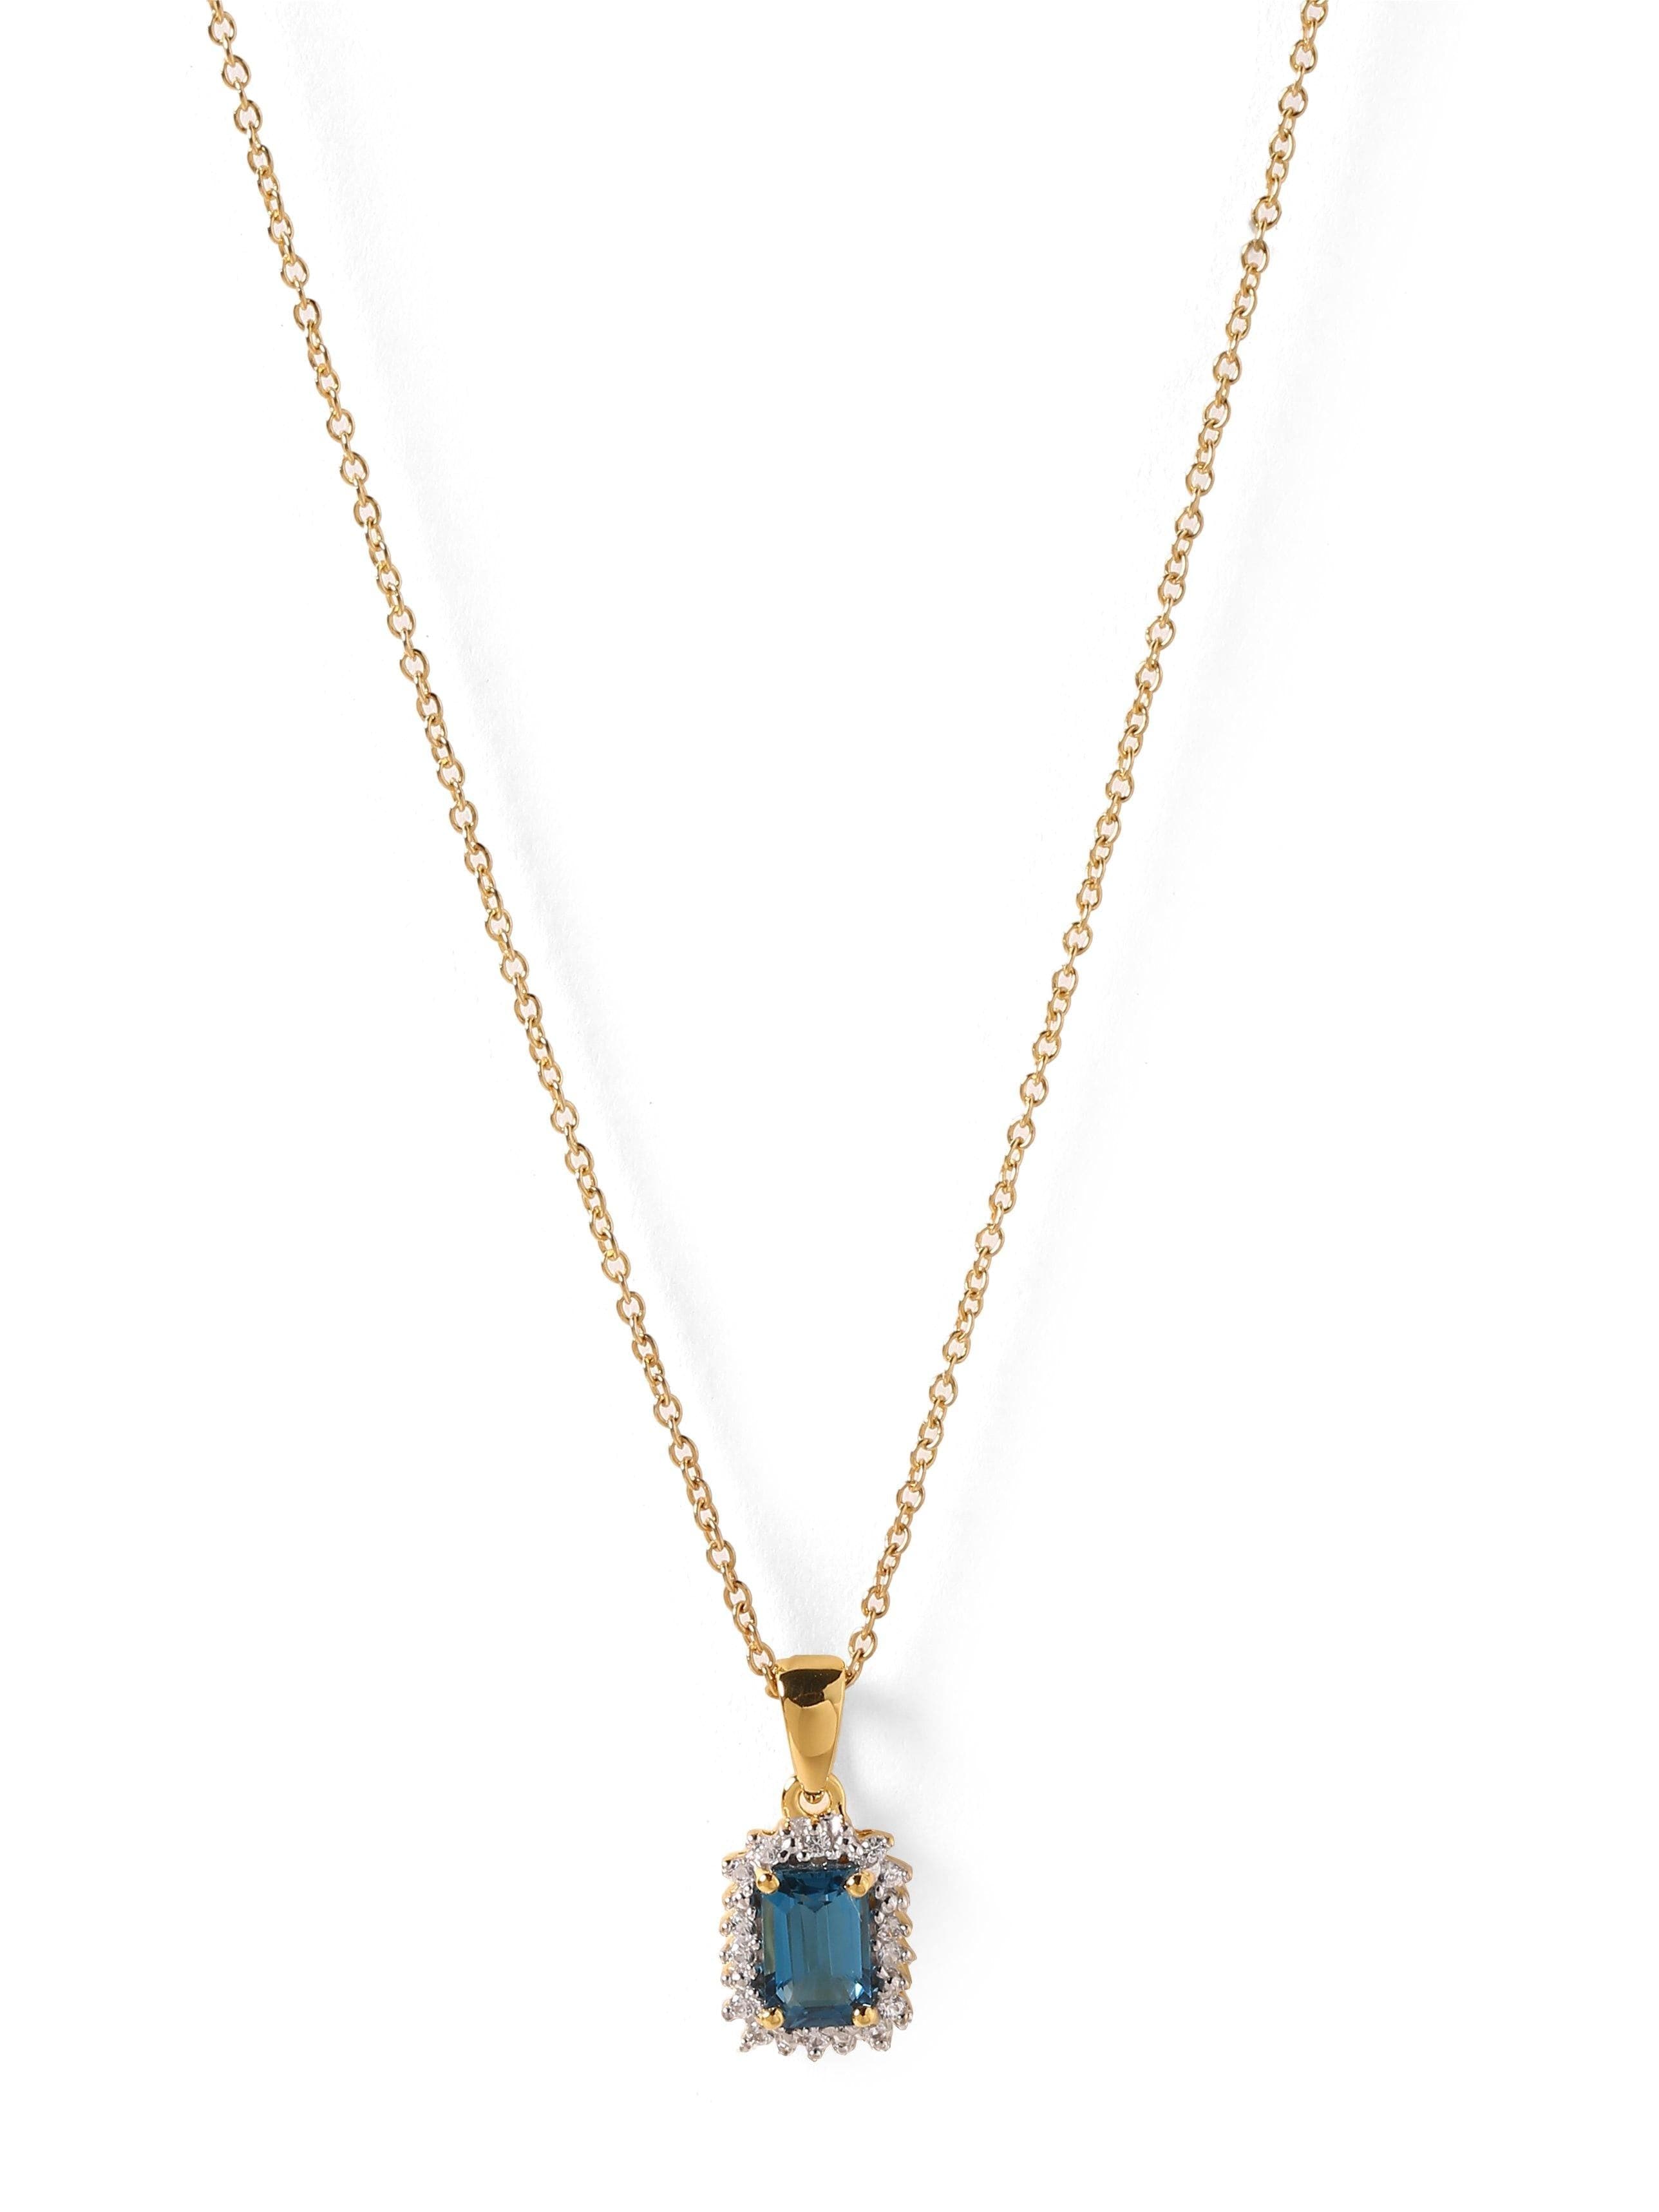 0.76 Ct. London Blue Topaz Solid 10k Yellow Gold Chain Pendant Jewelry - YoTreasure